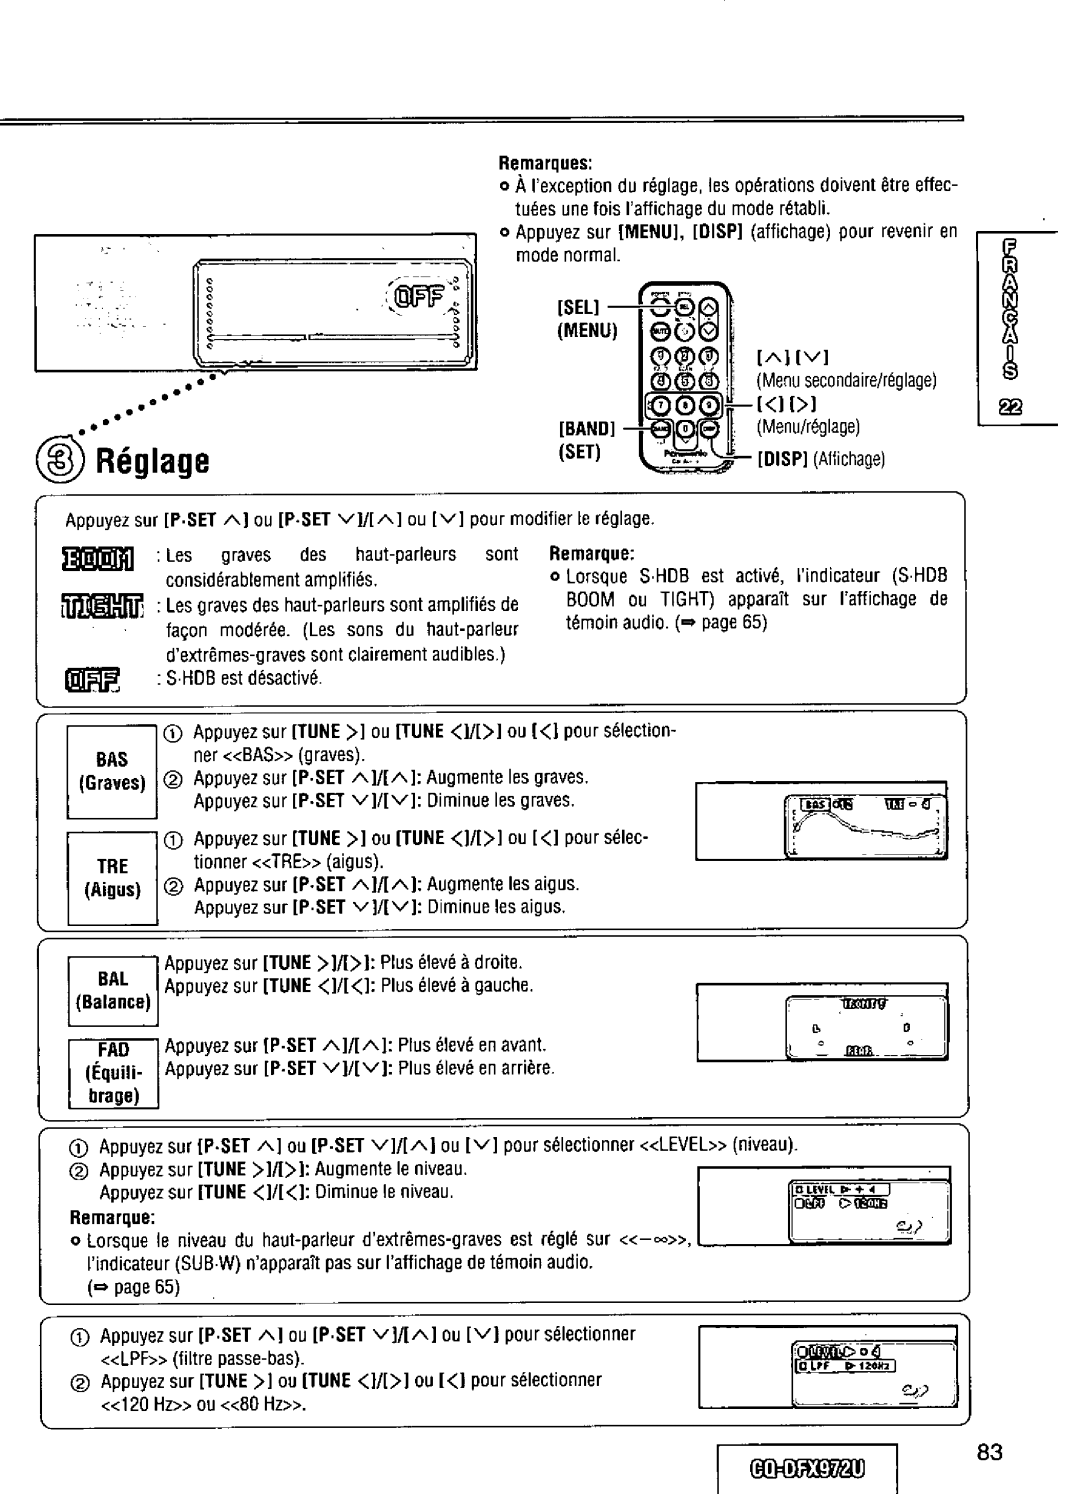 Panasonic CQ-DFX972U manual 